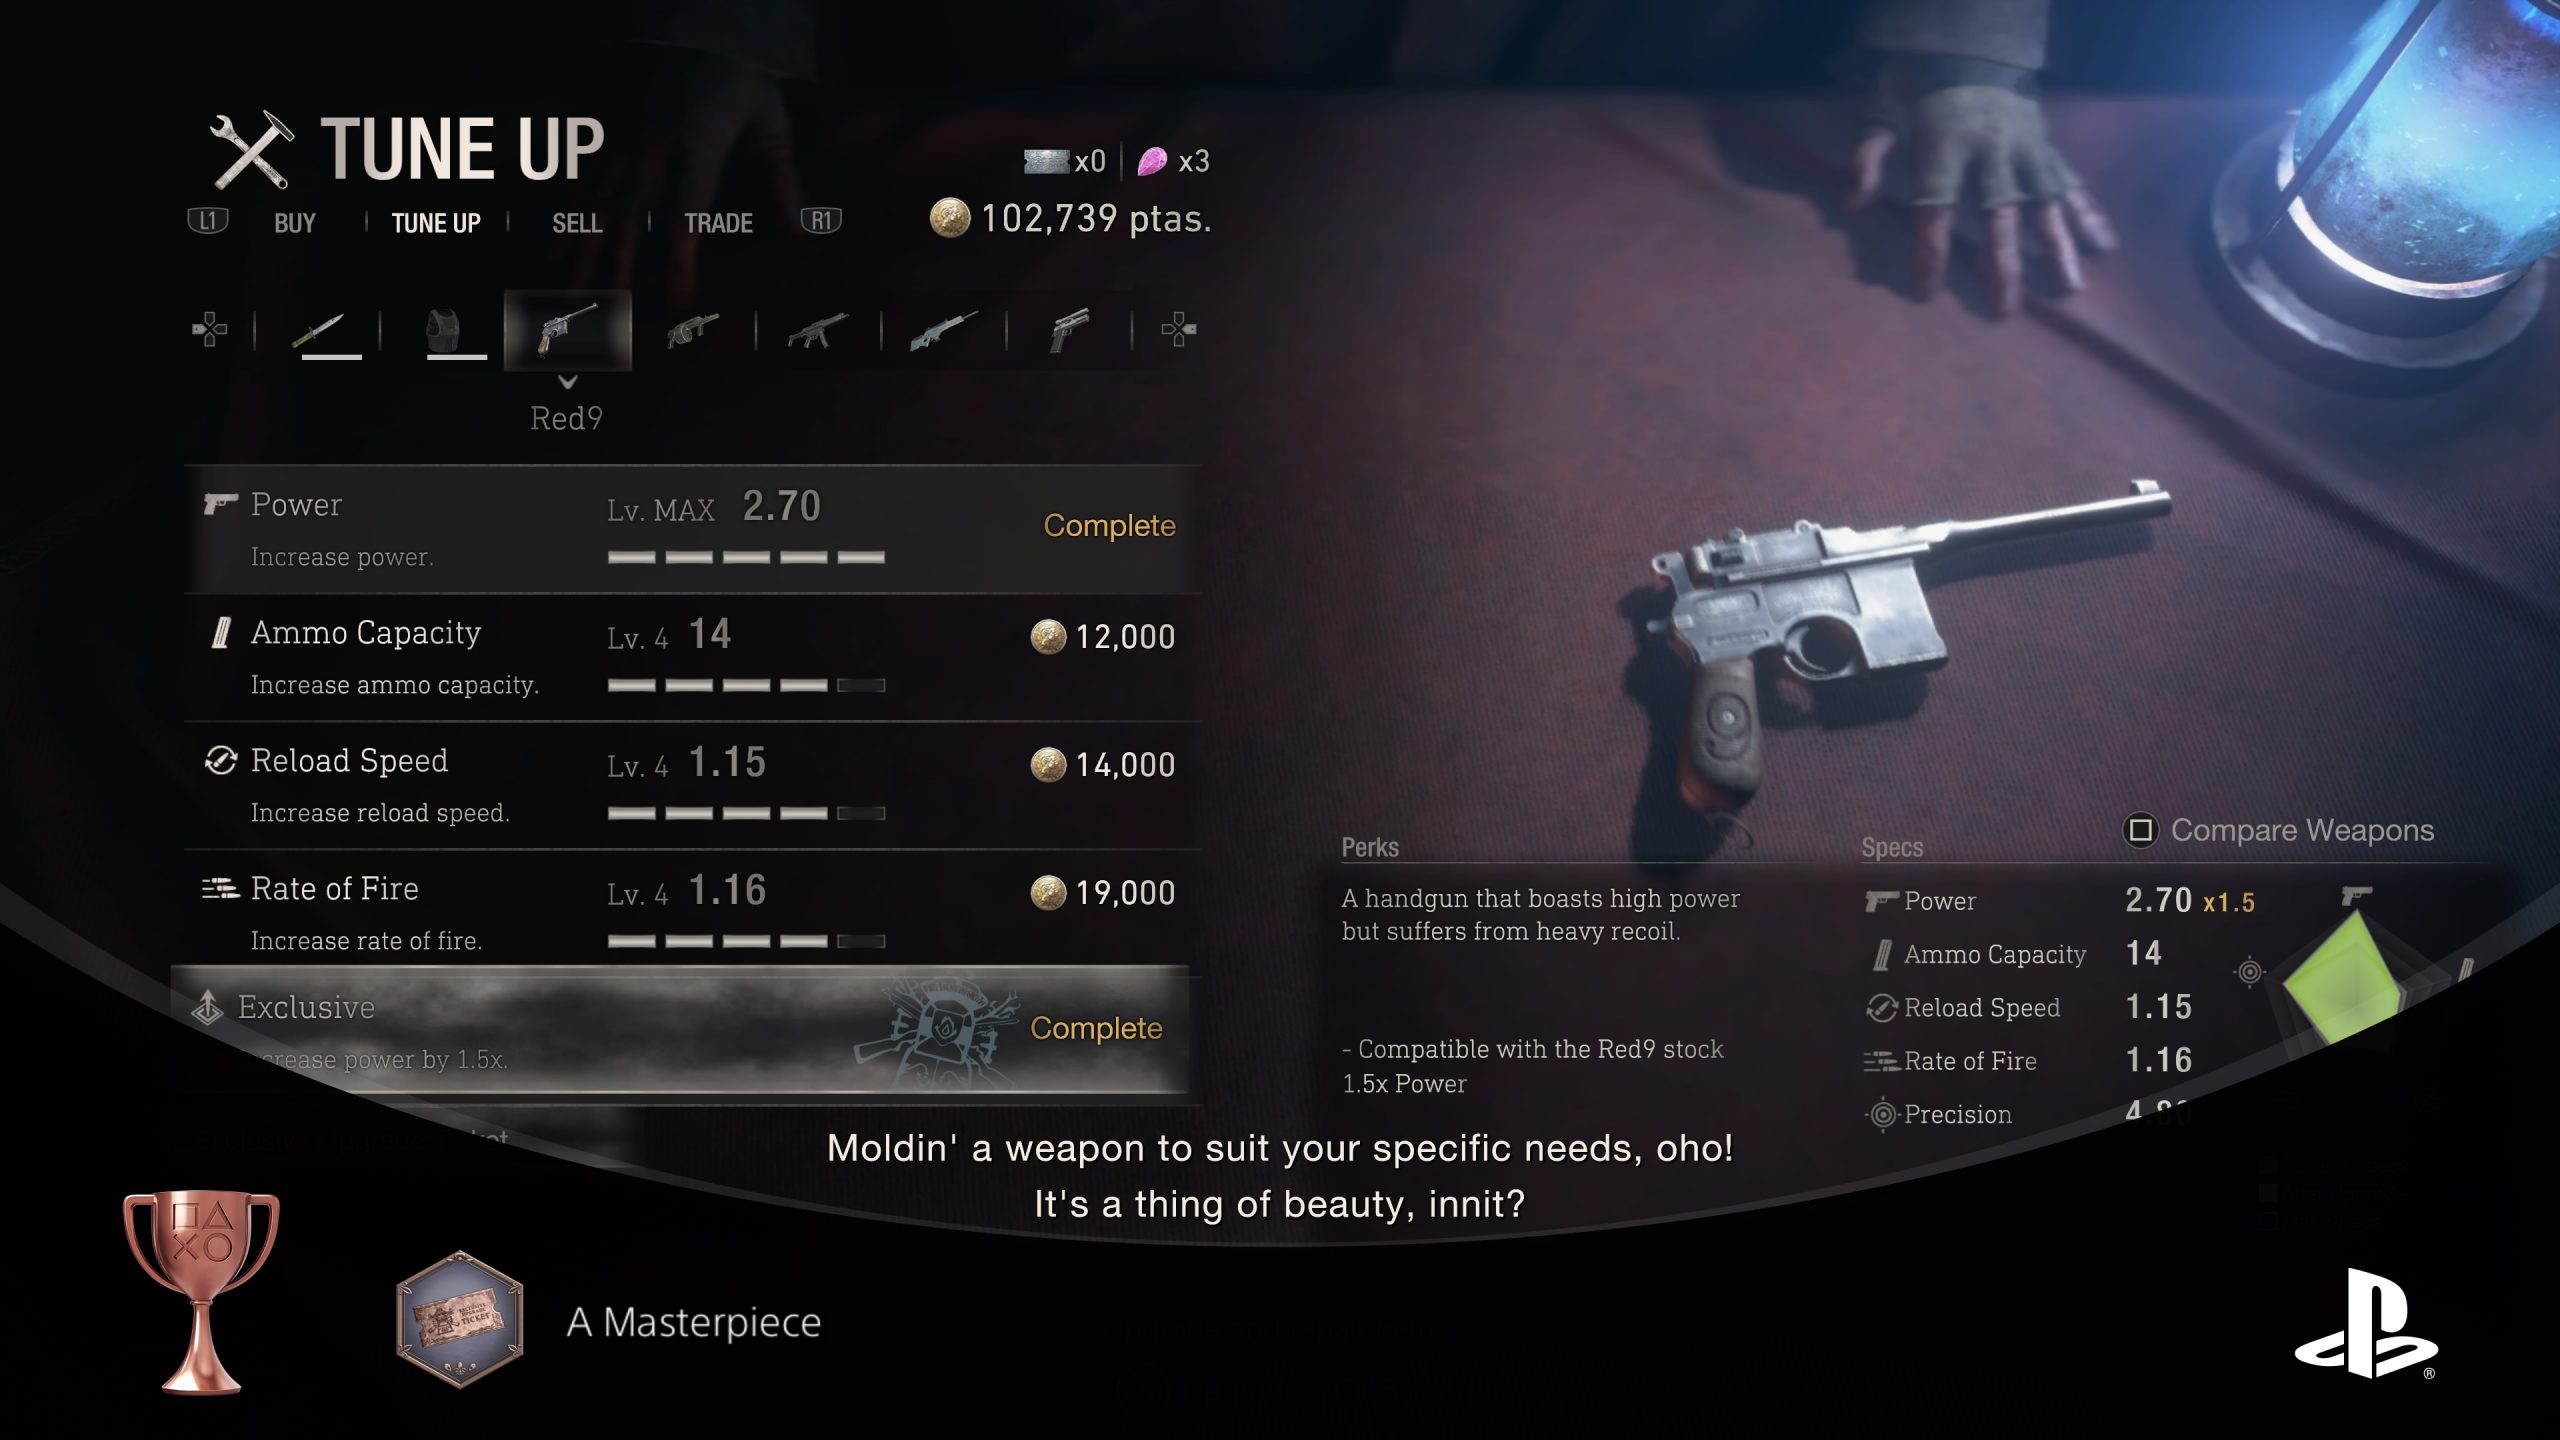 Resident Evil 4 Remake: Best Handgun: Which Pistol Should I Choose